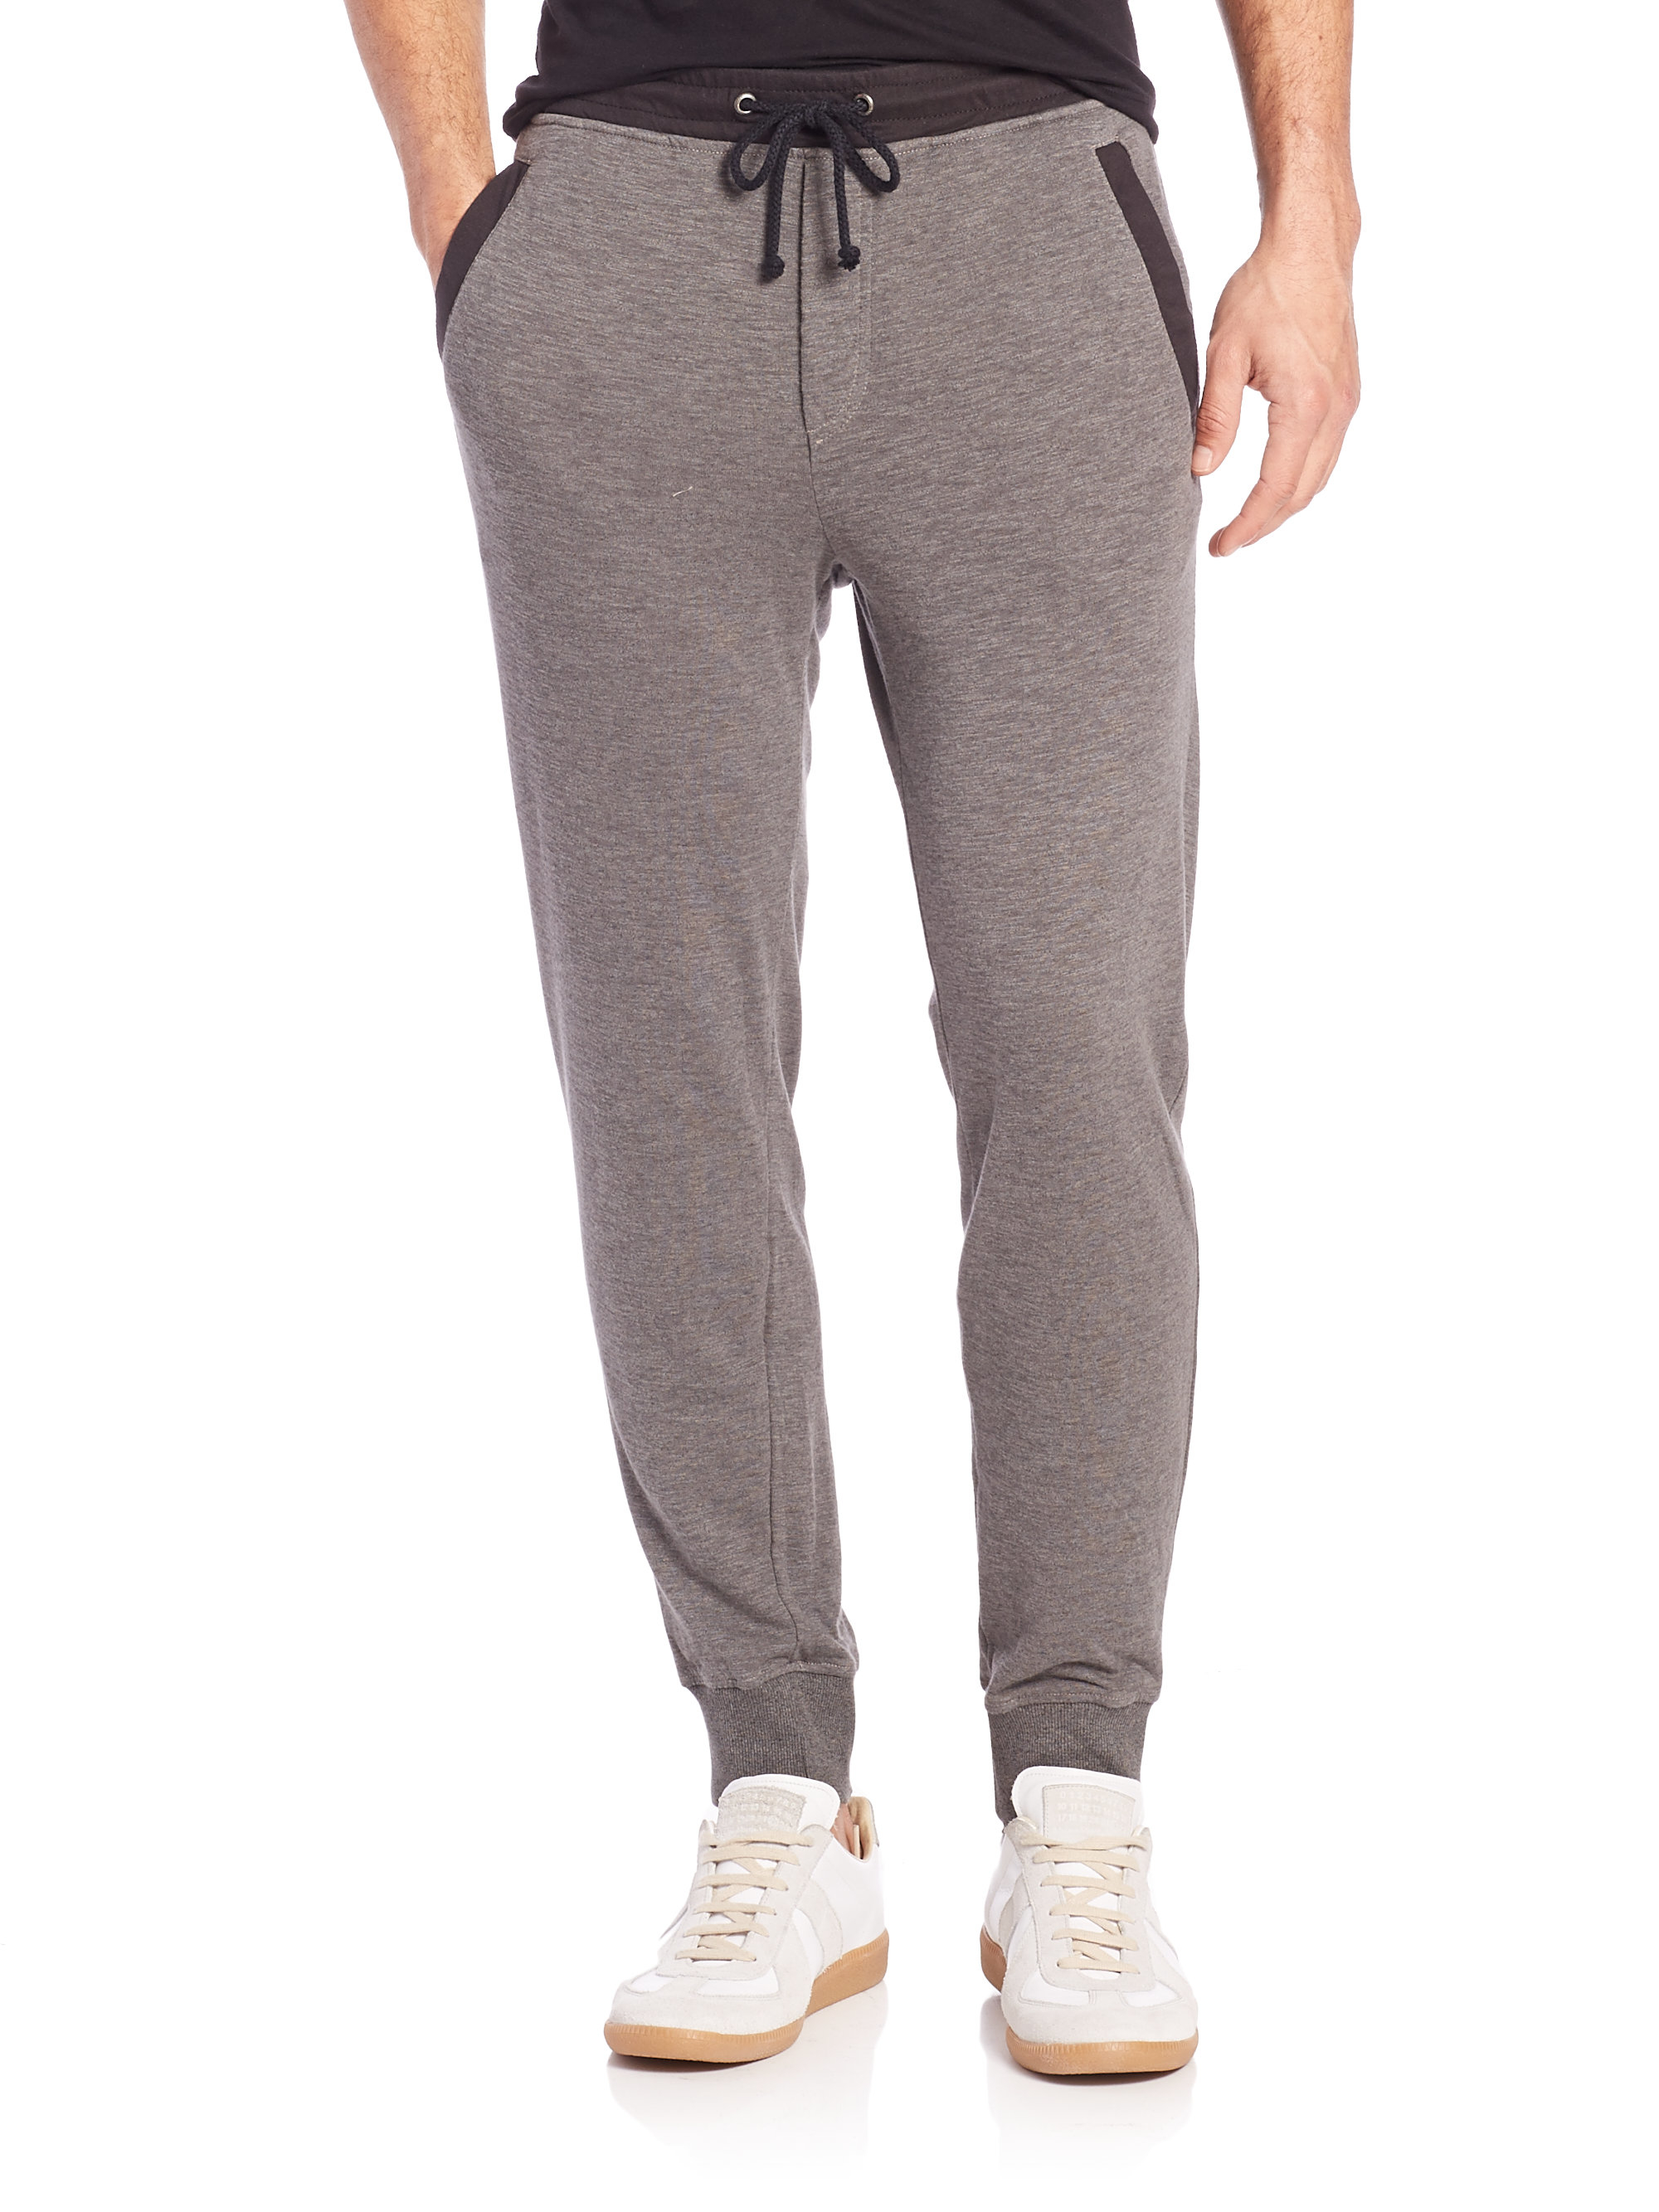 Lyst - Splendid mills Slim-fit Double Faced Jogger Pants in Gray for Men